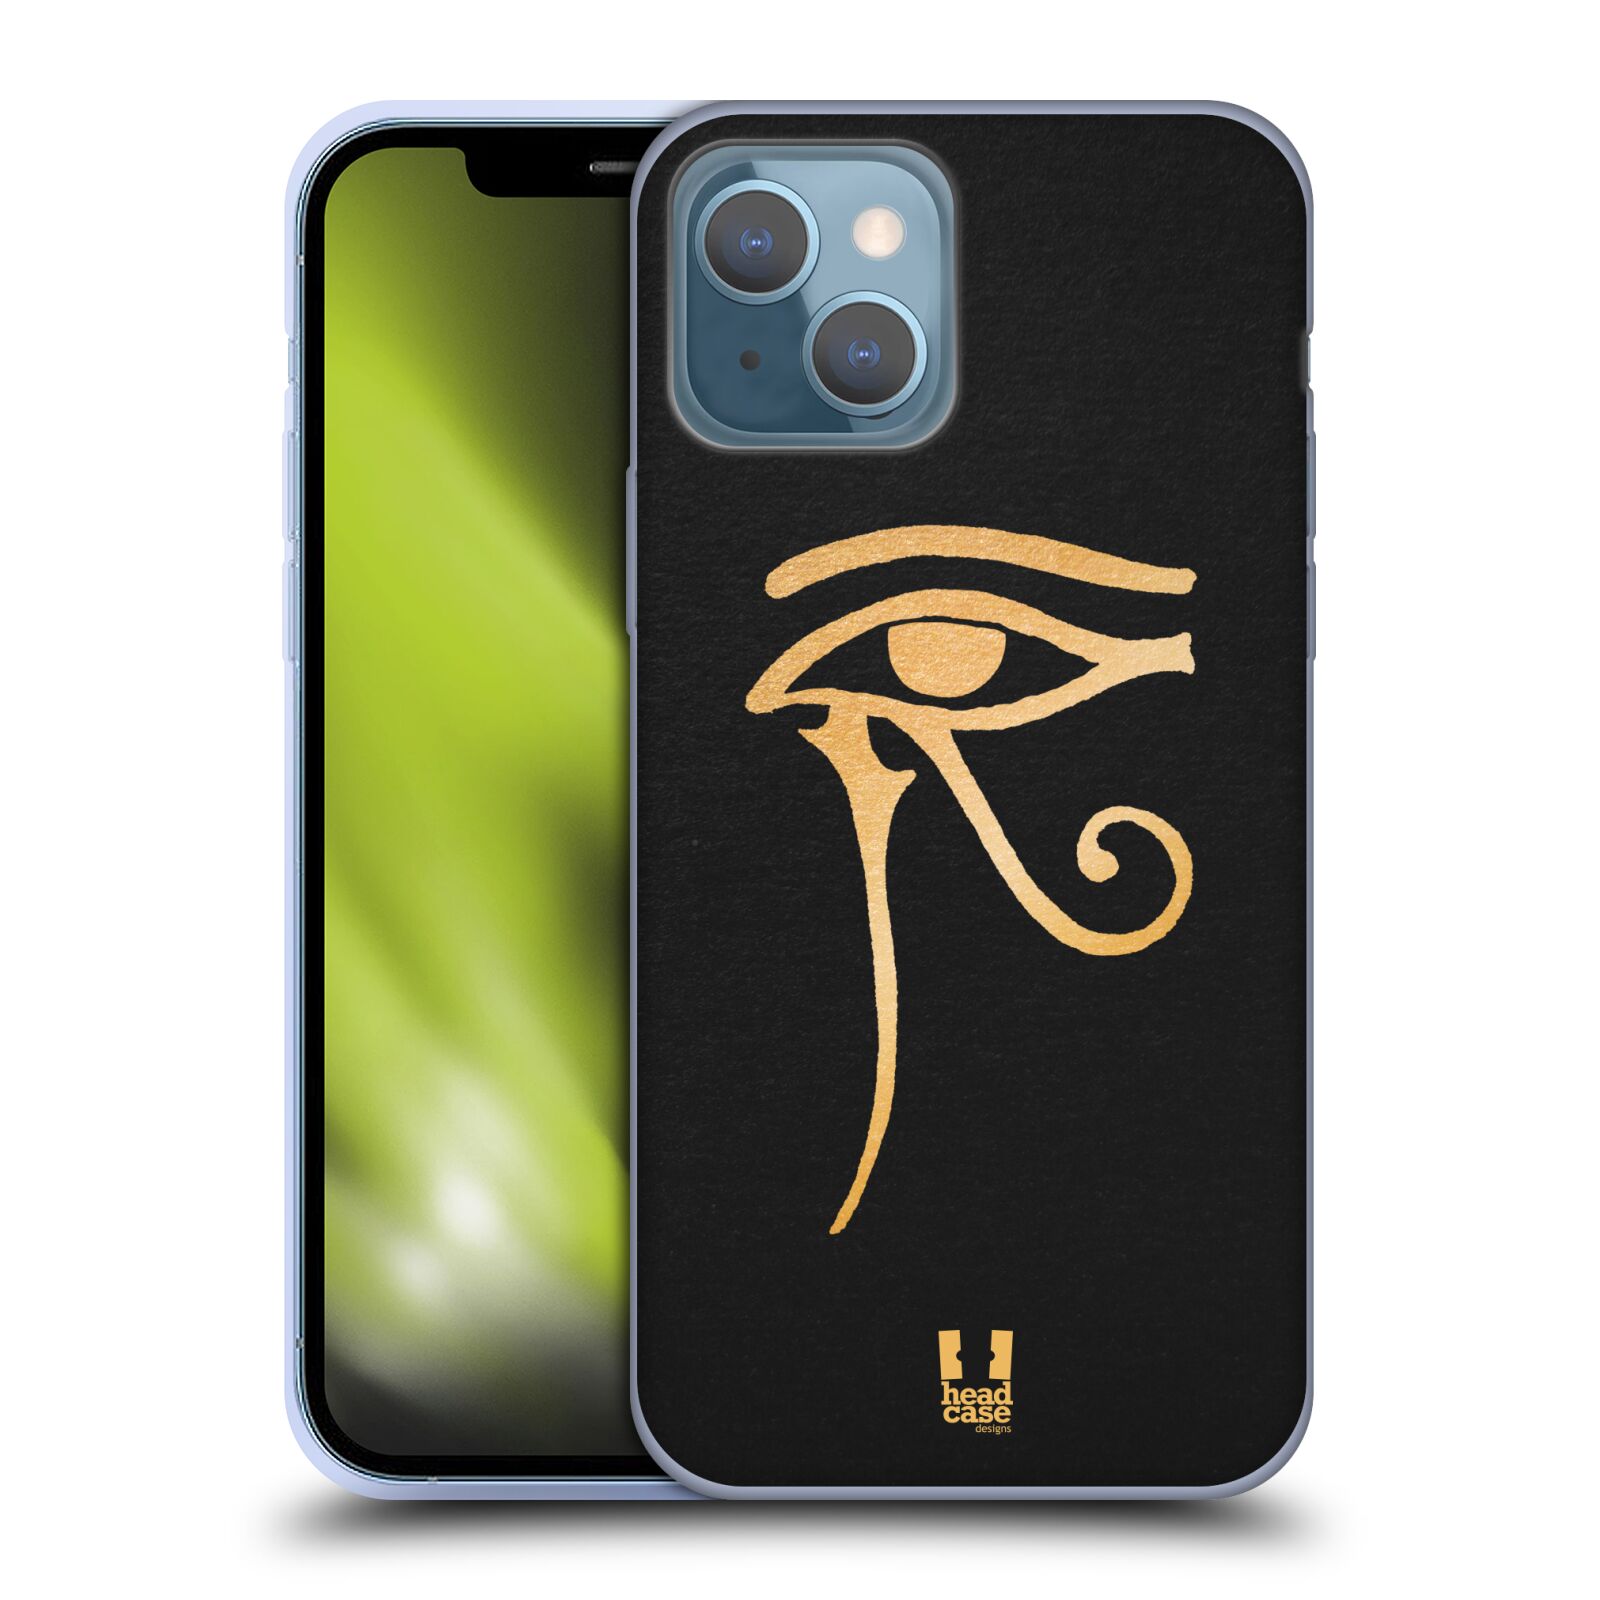 Silikonové pouzdro na mobil Apple iPhone 13 - Head Case - EGYPT OKO BOHA RA (Silikonový kryt, obal, pouzdro na mobilní telefon Apple iPhone 13 s motivem EGYPT OKO BOHA RA)